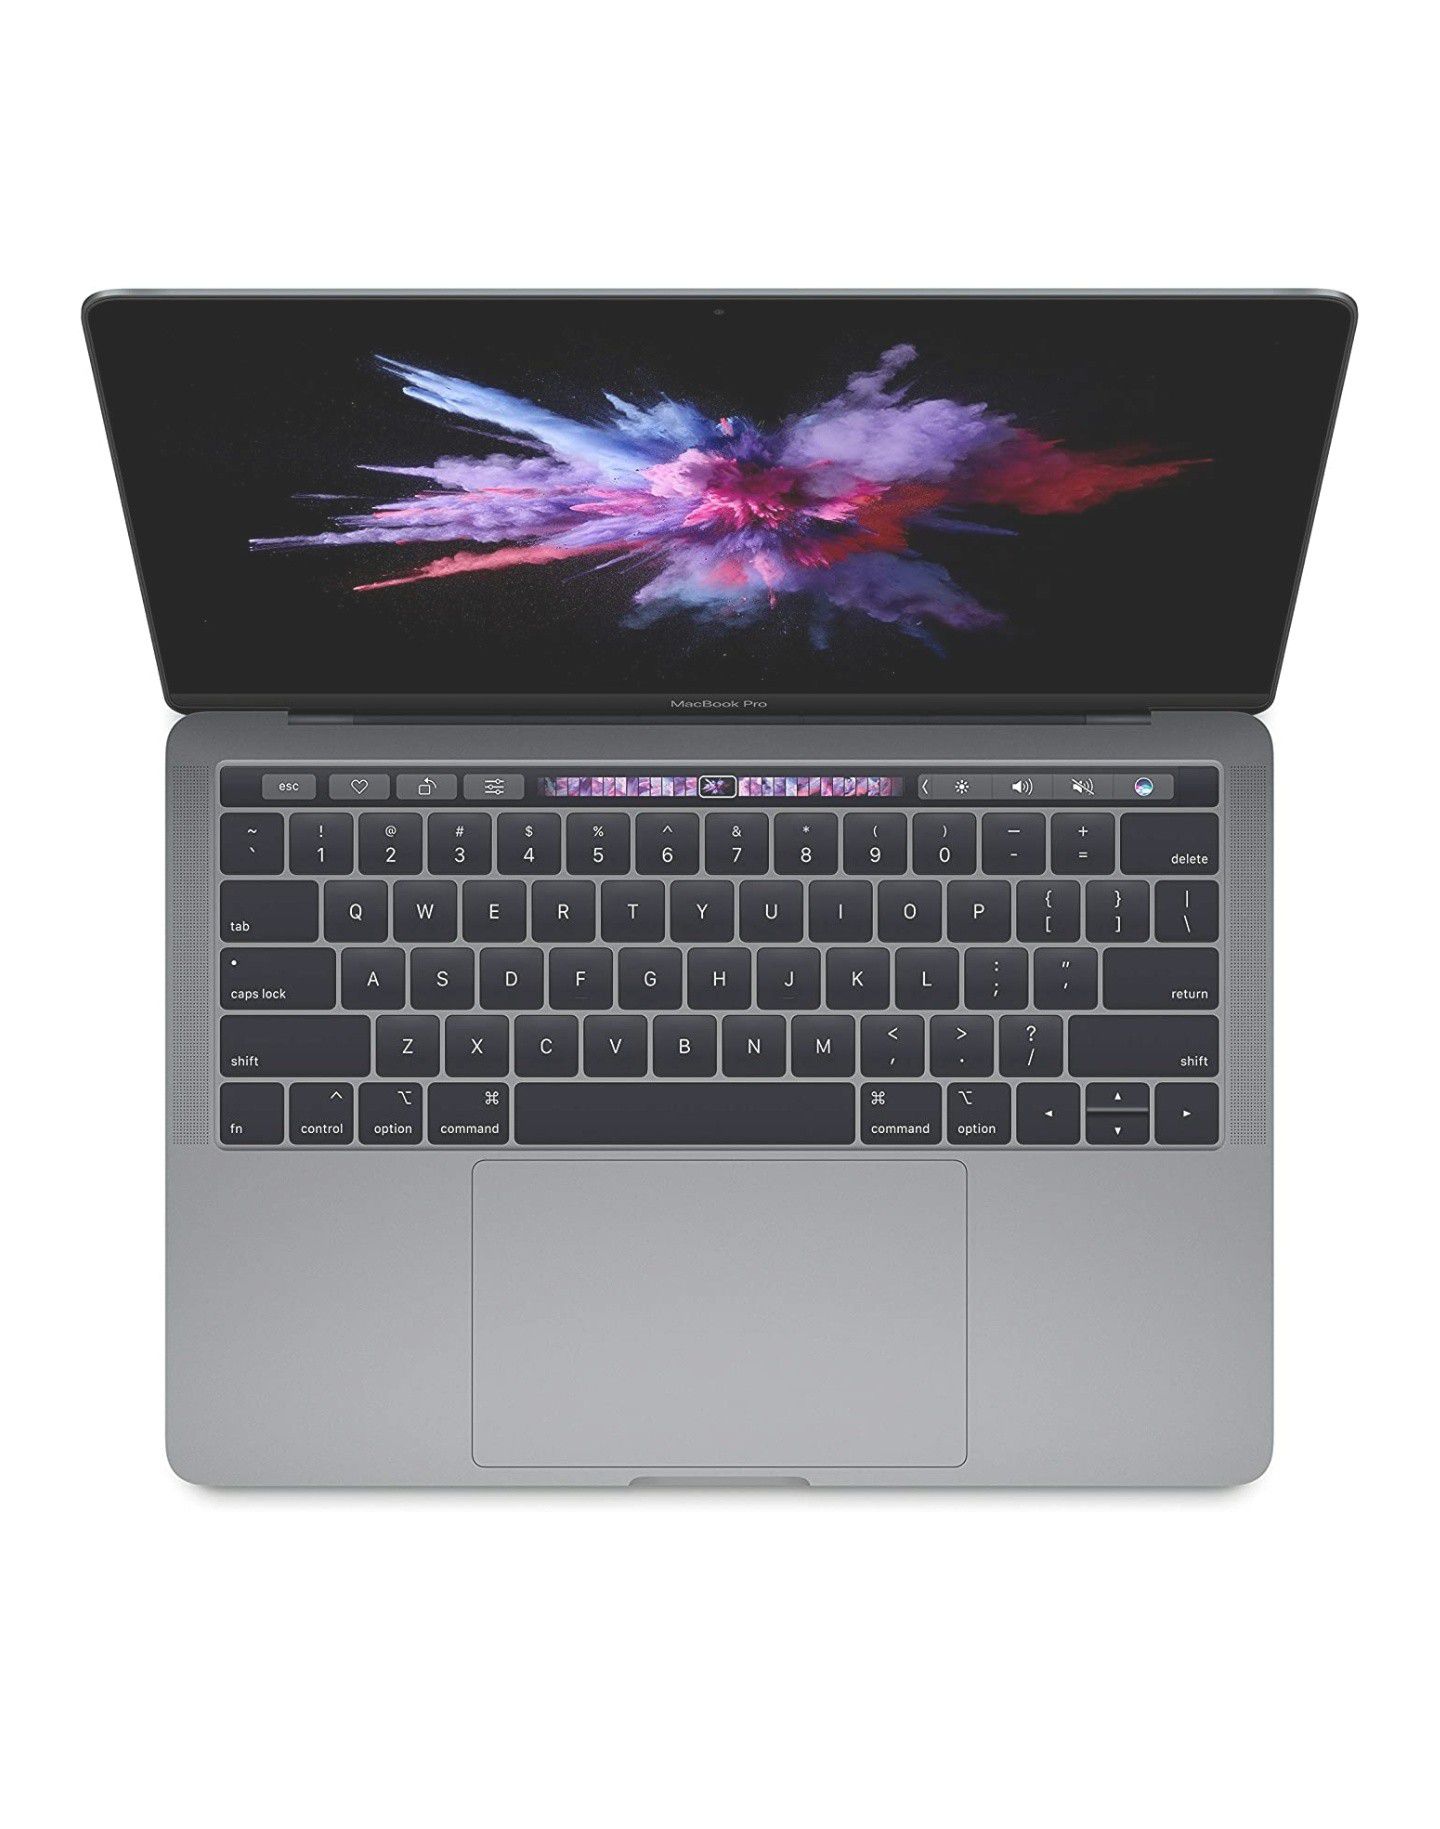 Apple MacBook Pro (13-Inch, 8GB RAM, 128GB Storage) - Space Gray 2019